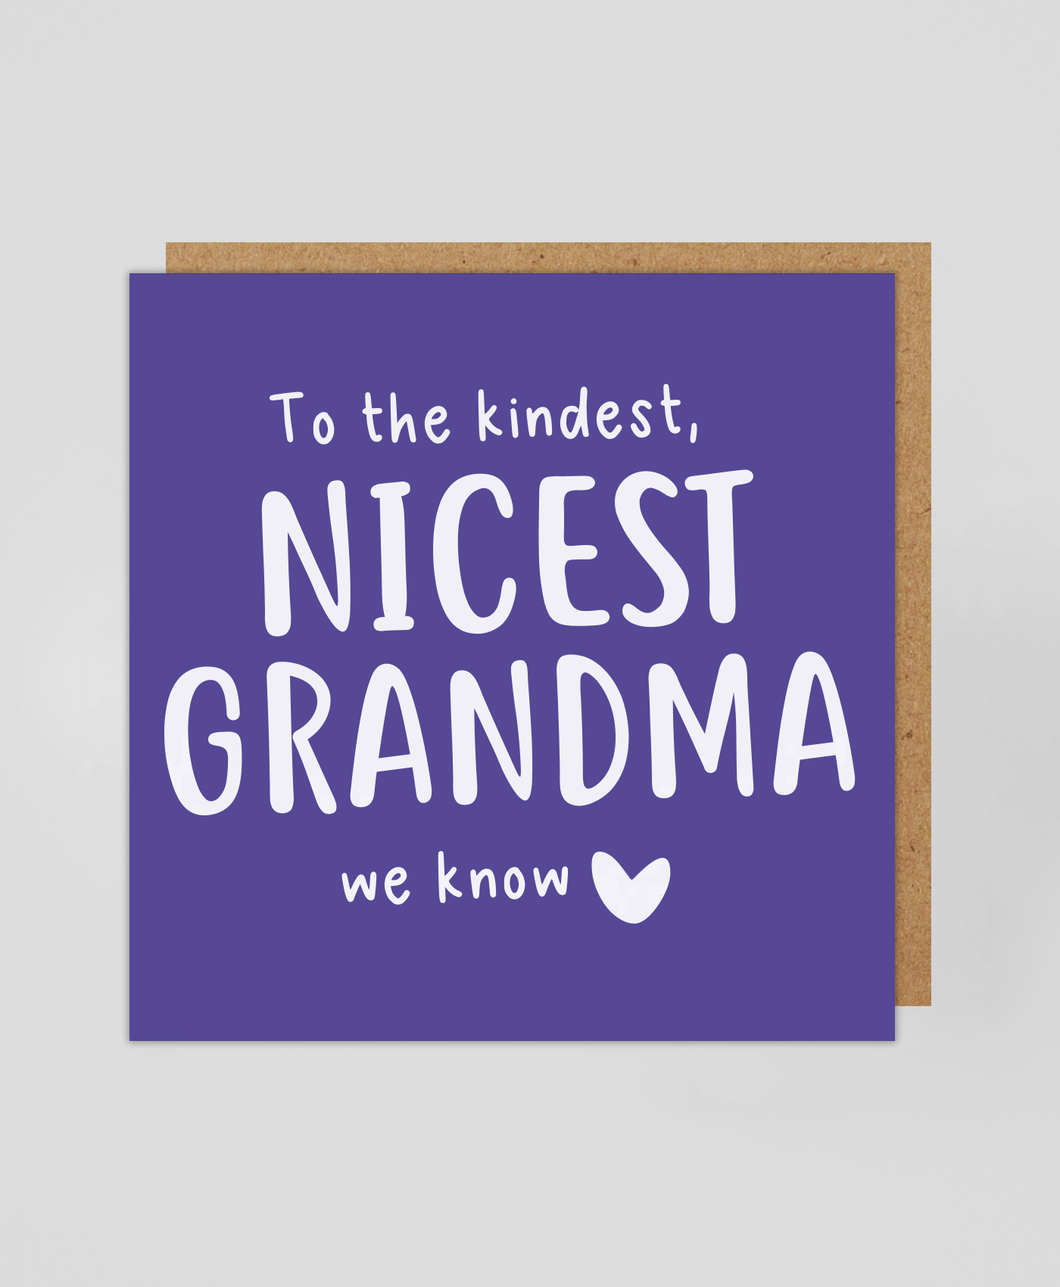 Nicest Grandma - Greetings Card